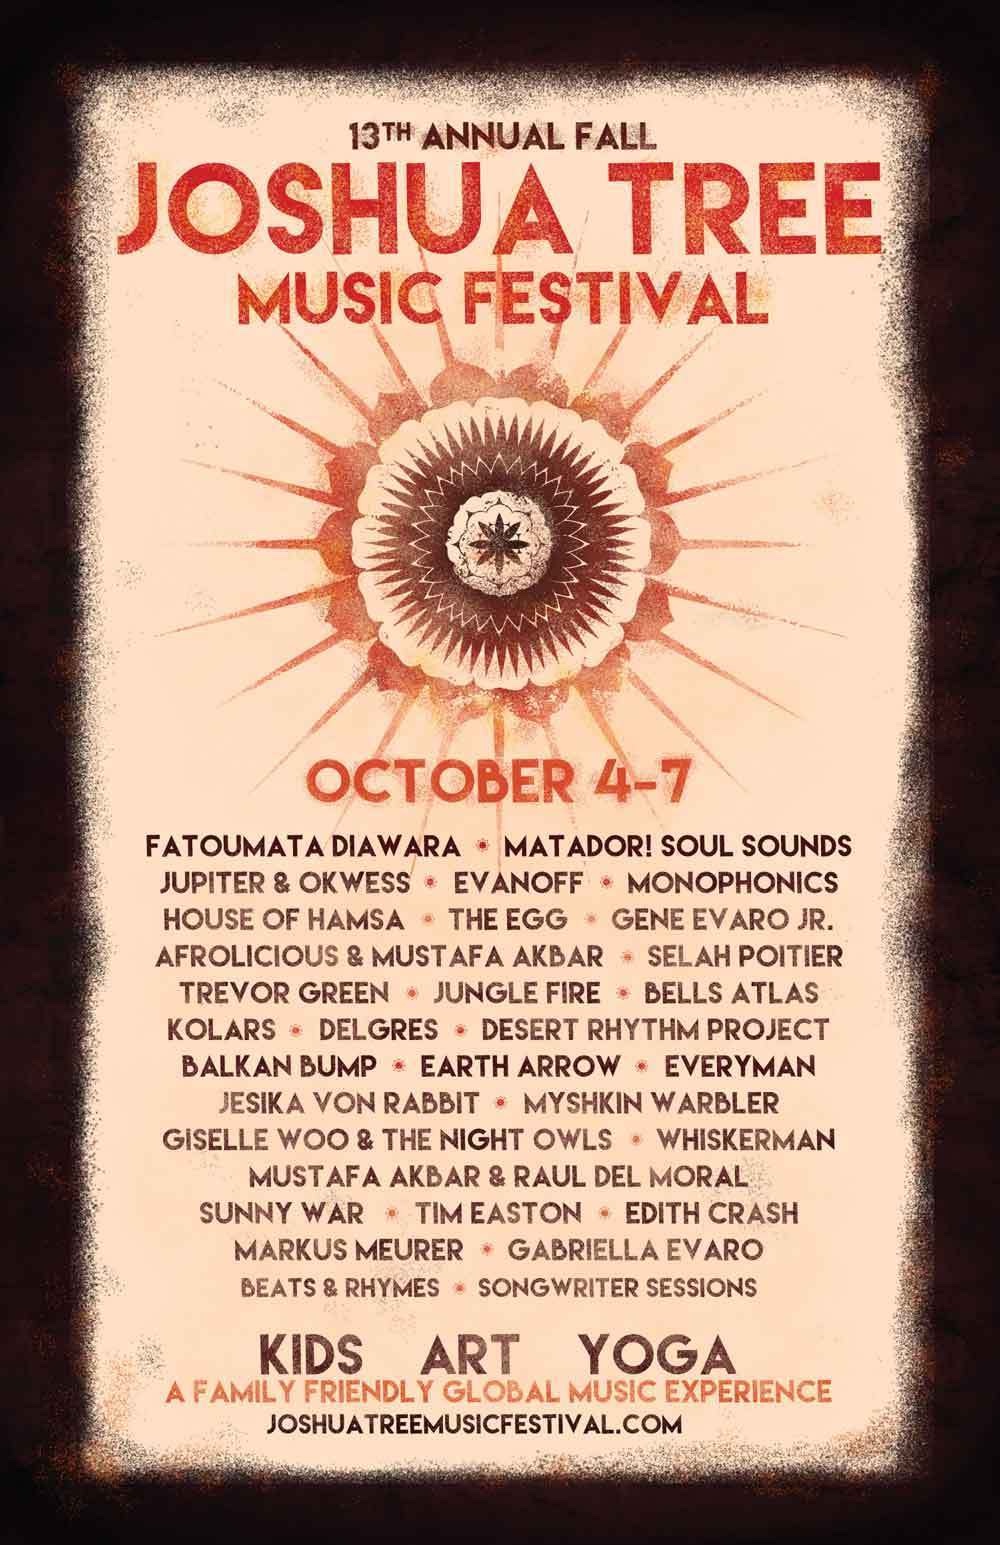 Fall Joshua Tree Music Festival 2018 Lineup poster image